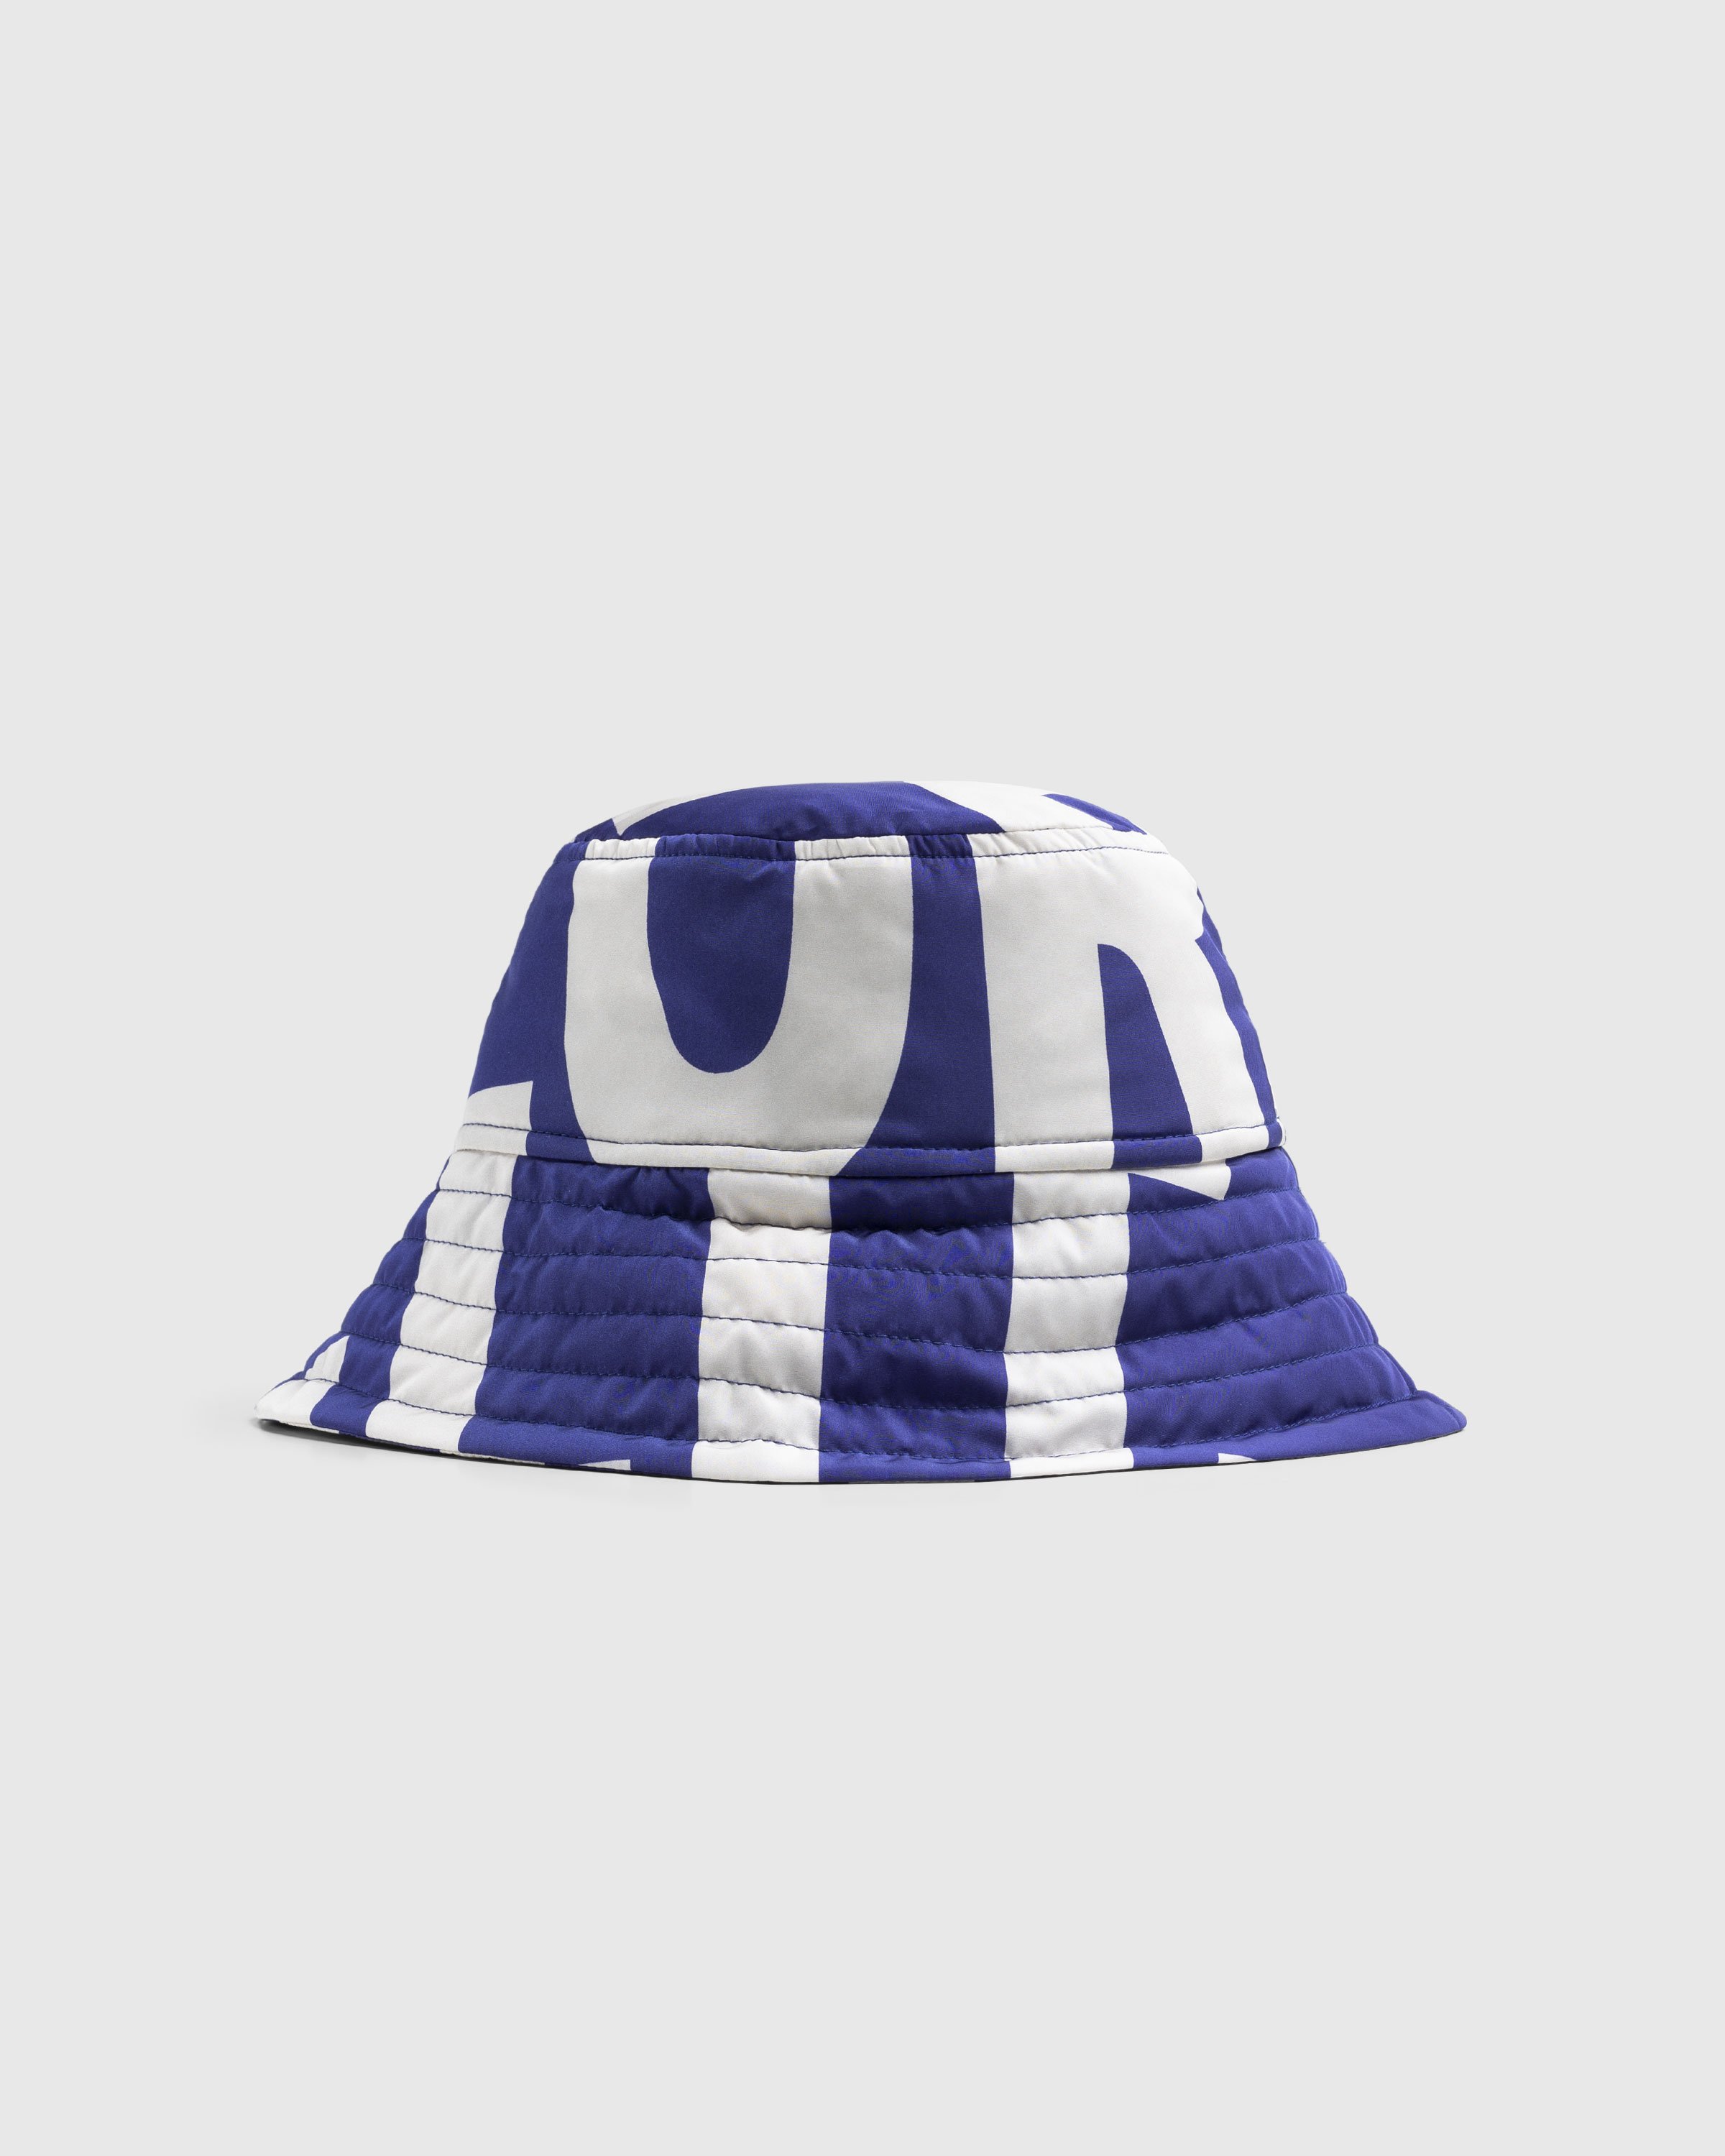 Dries van Noten - Gilly Hat Blue - Accessories - Blue - Image 1